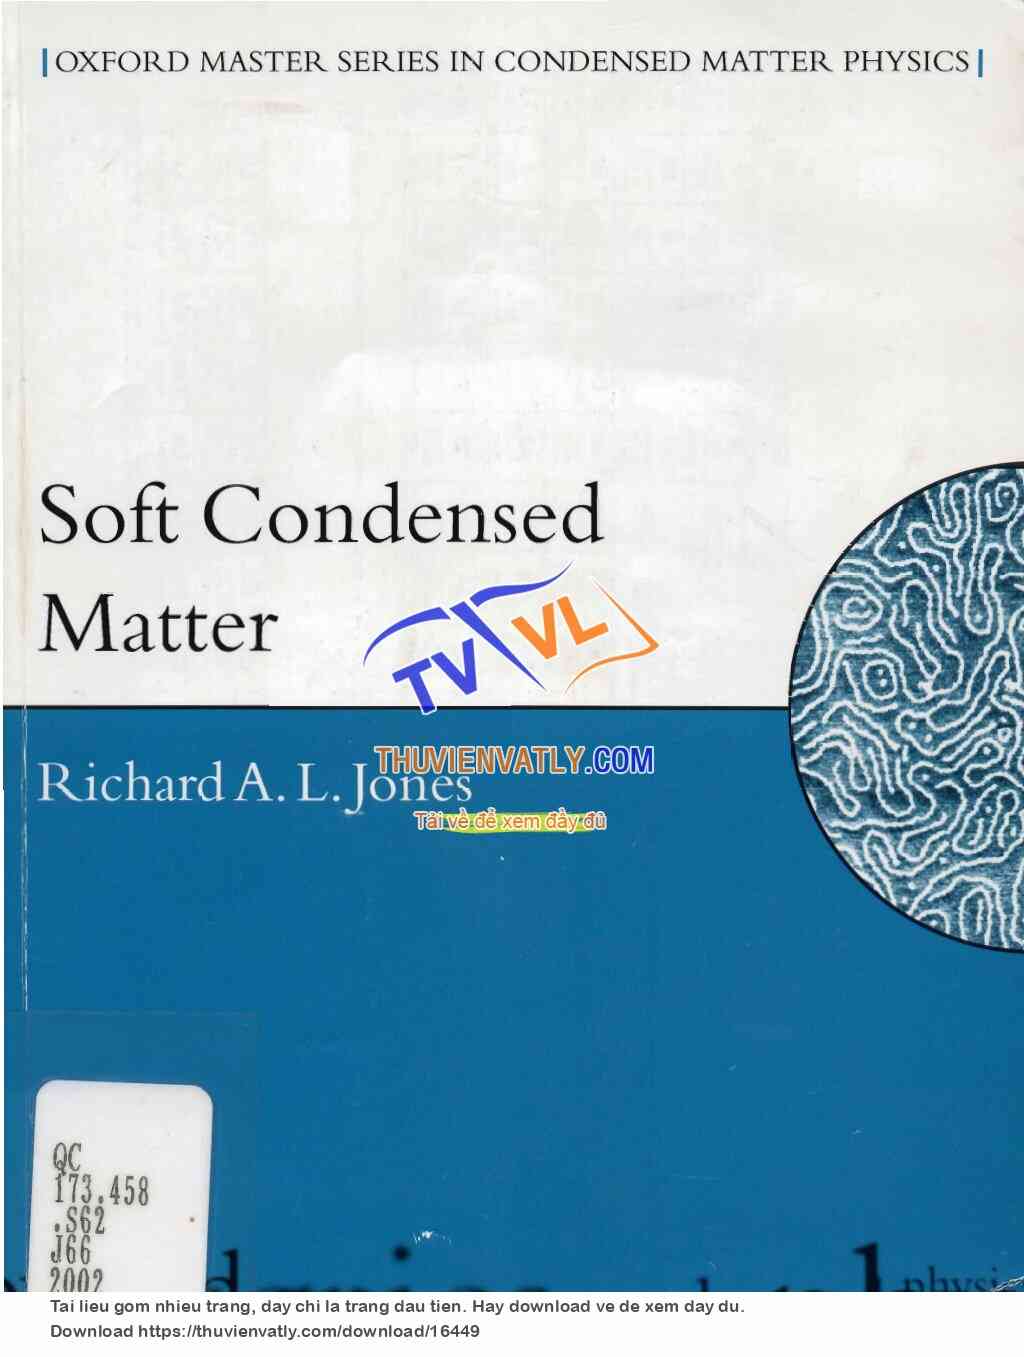 Soft Condensed Matter (Richard A.L. Jones, Oxford Press 2002)